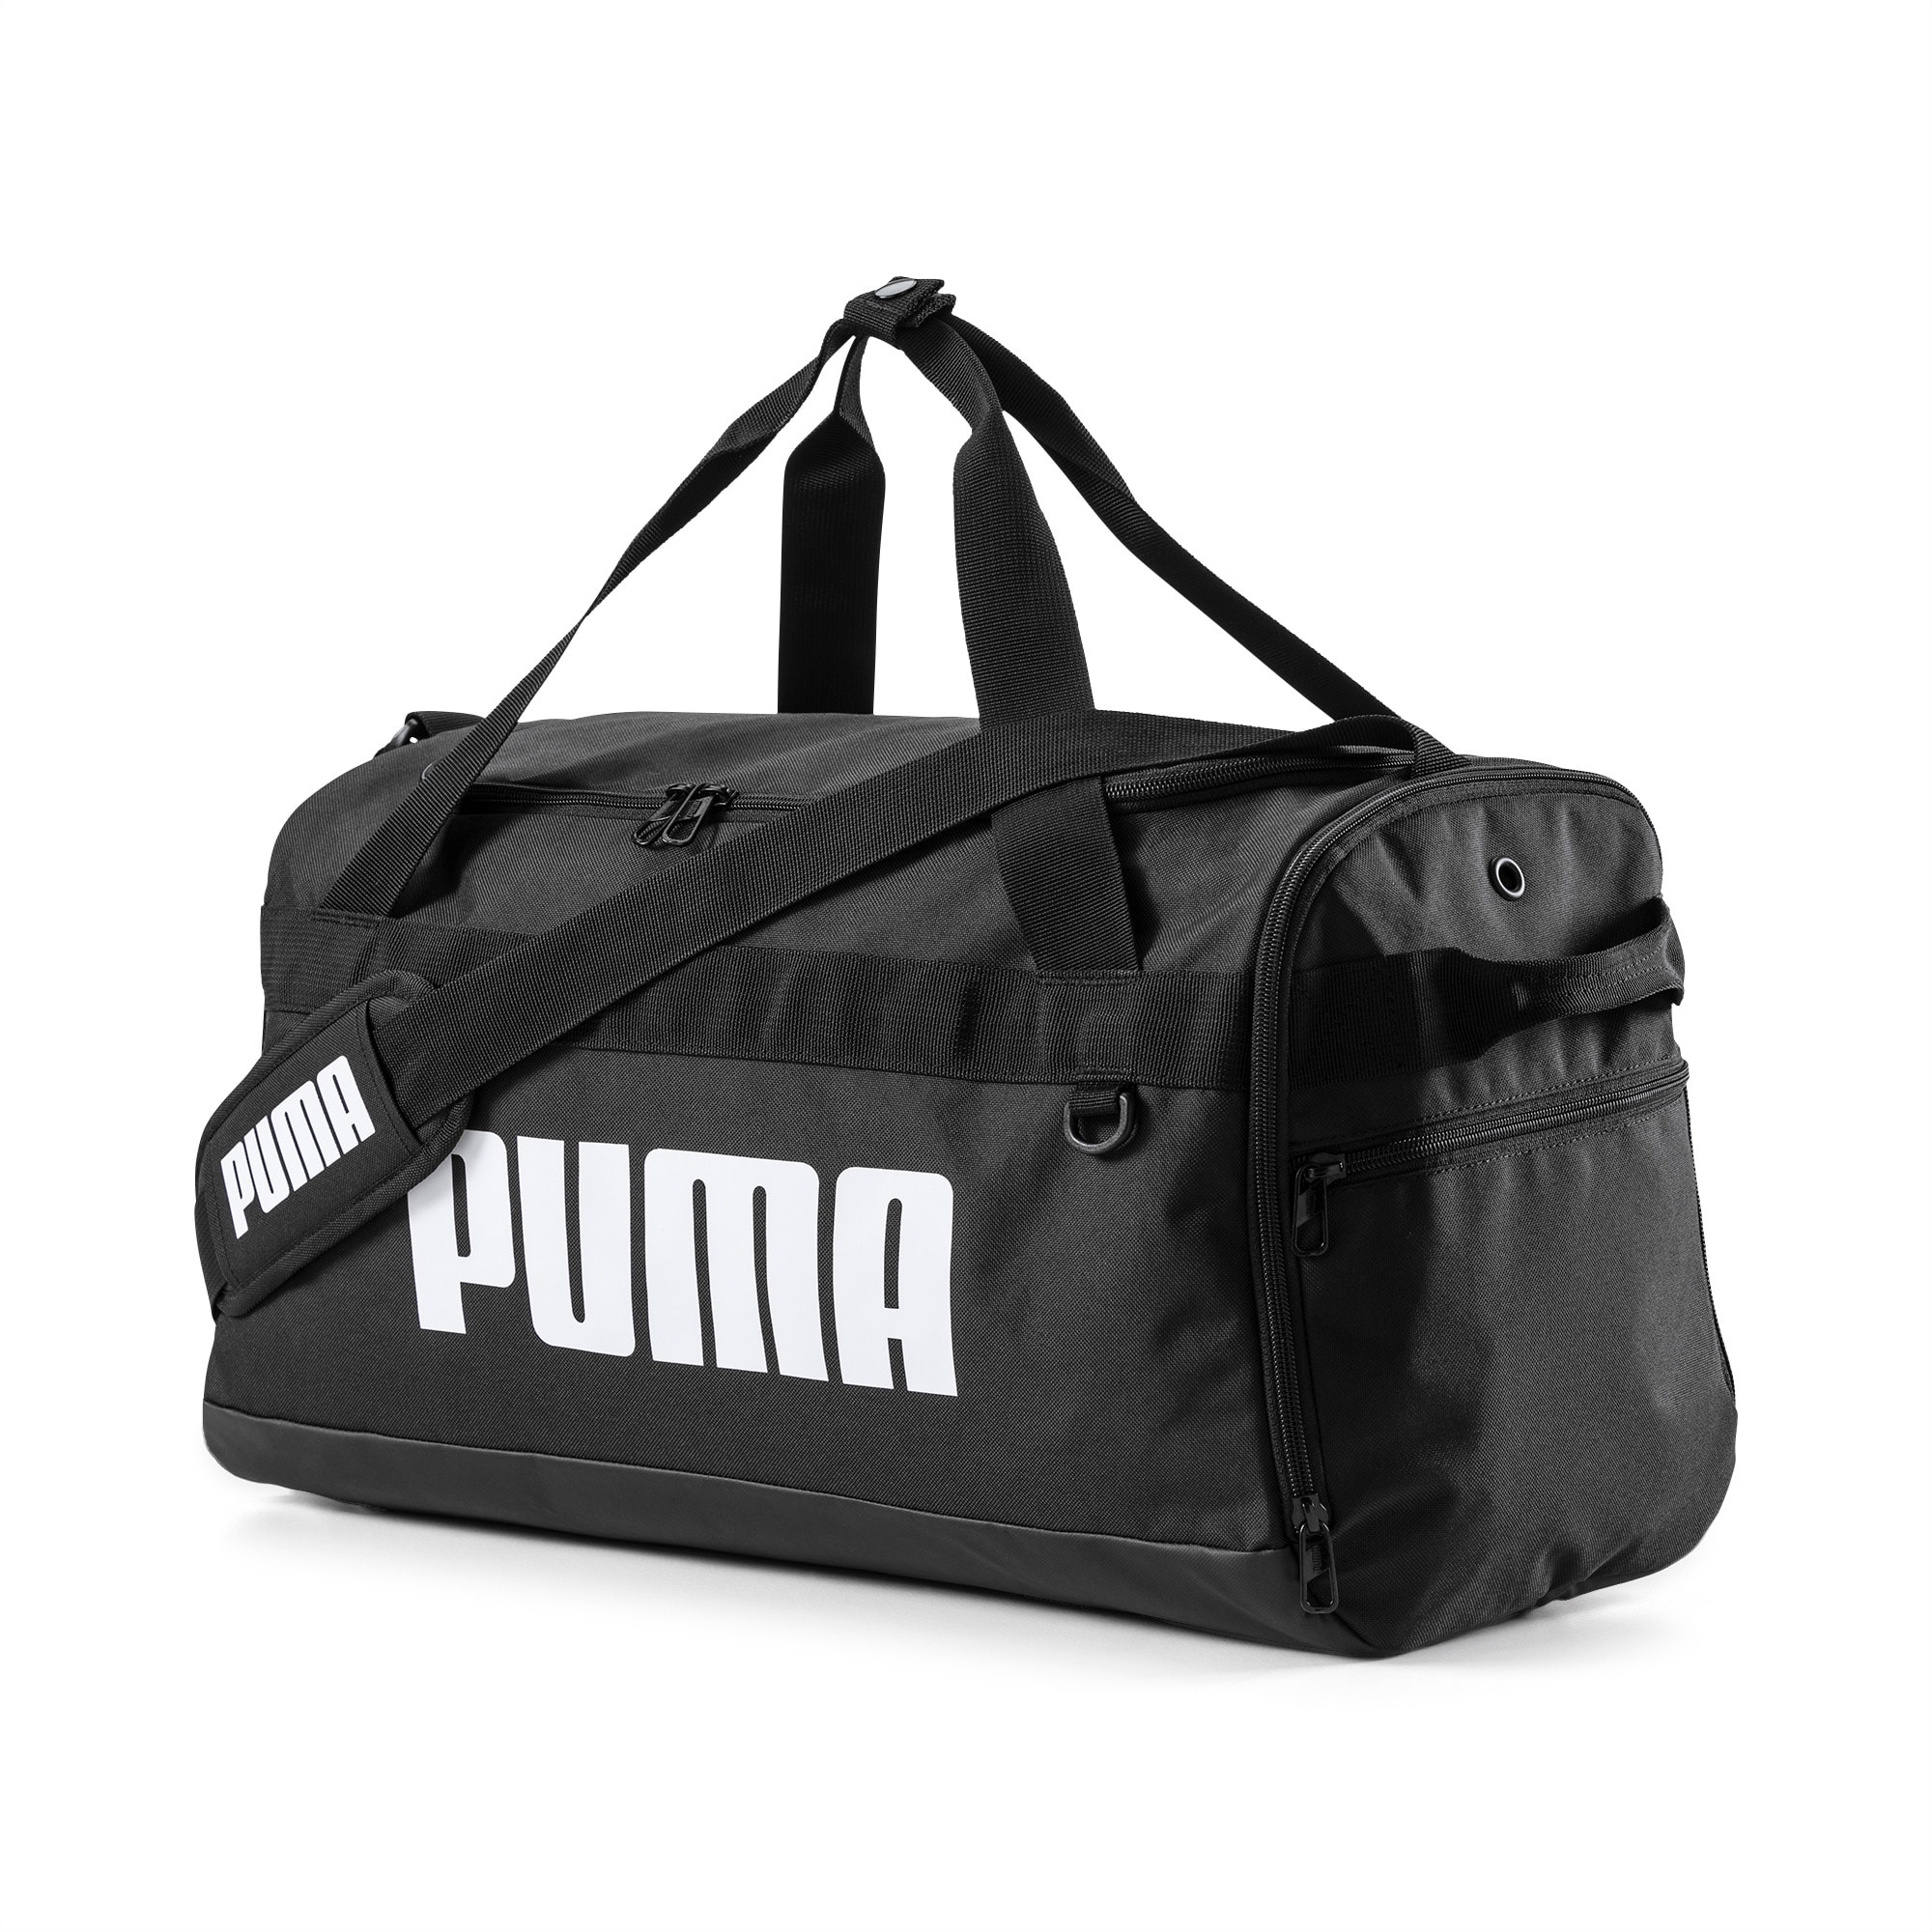 puma small duffle bag